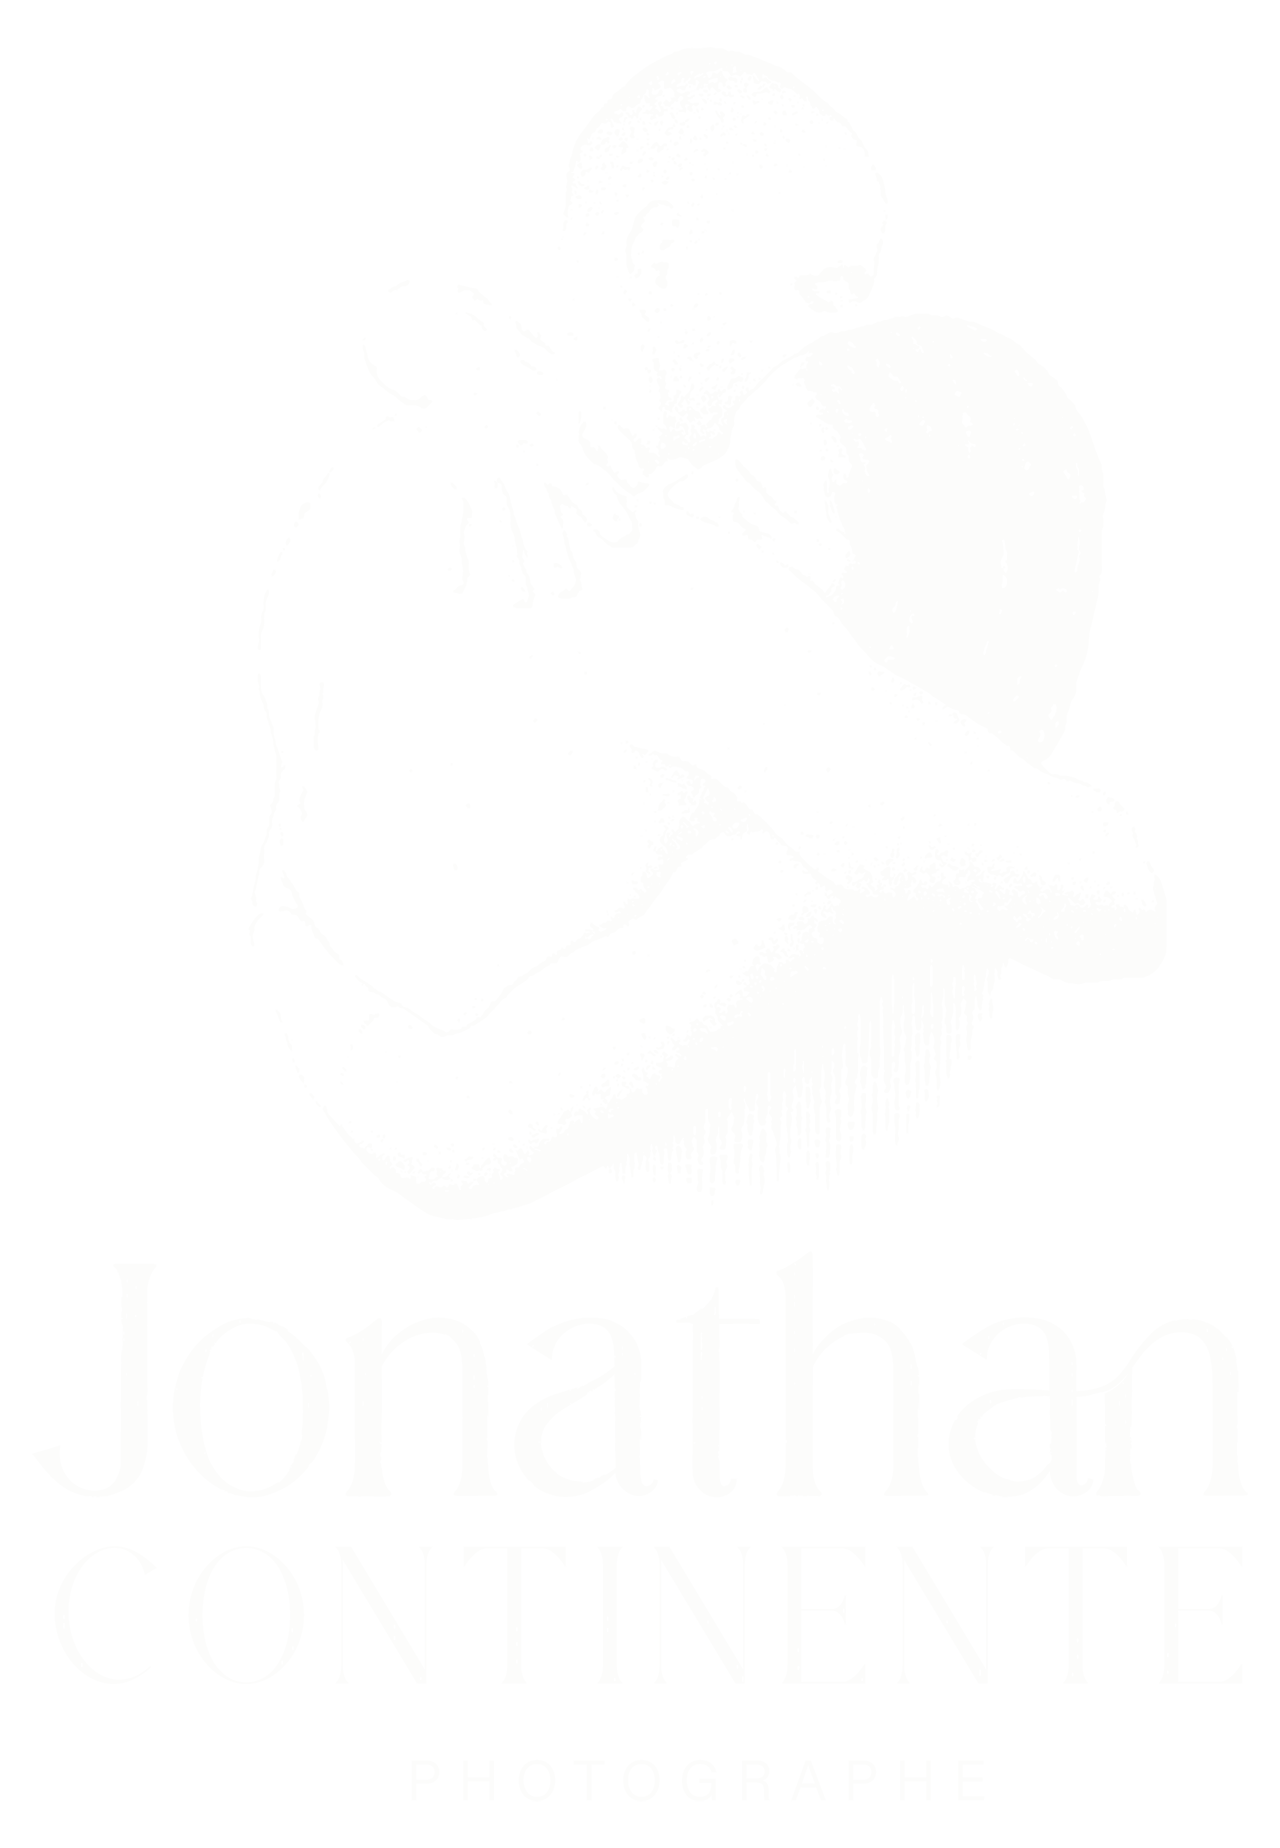 Jonathan Continente